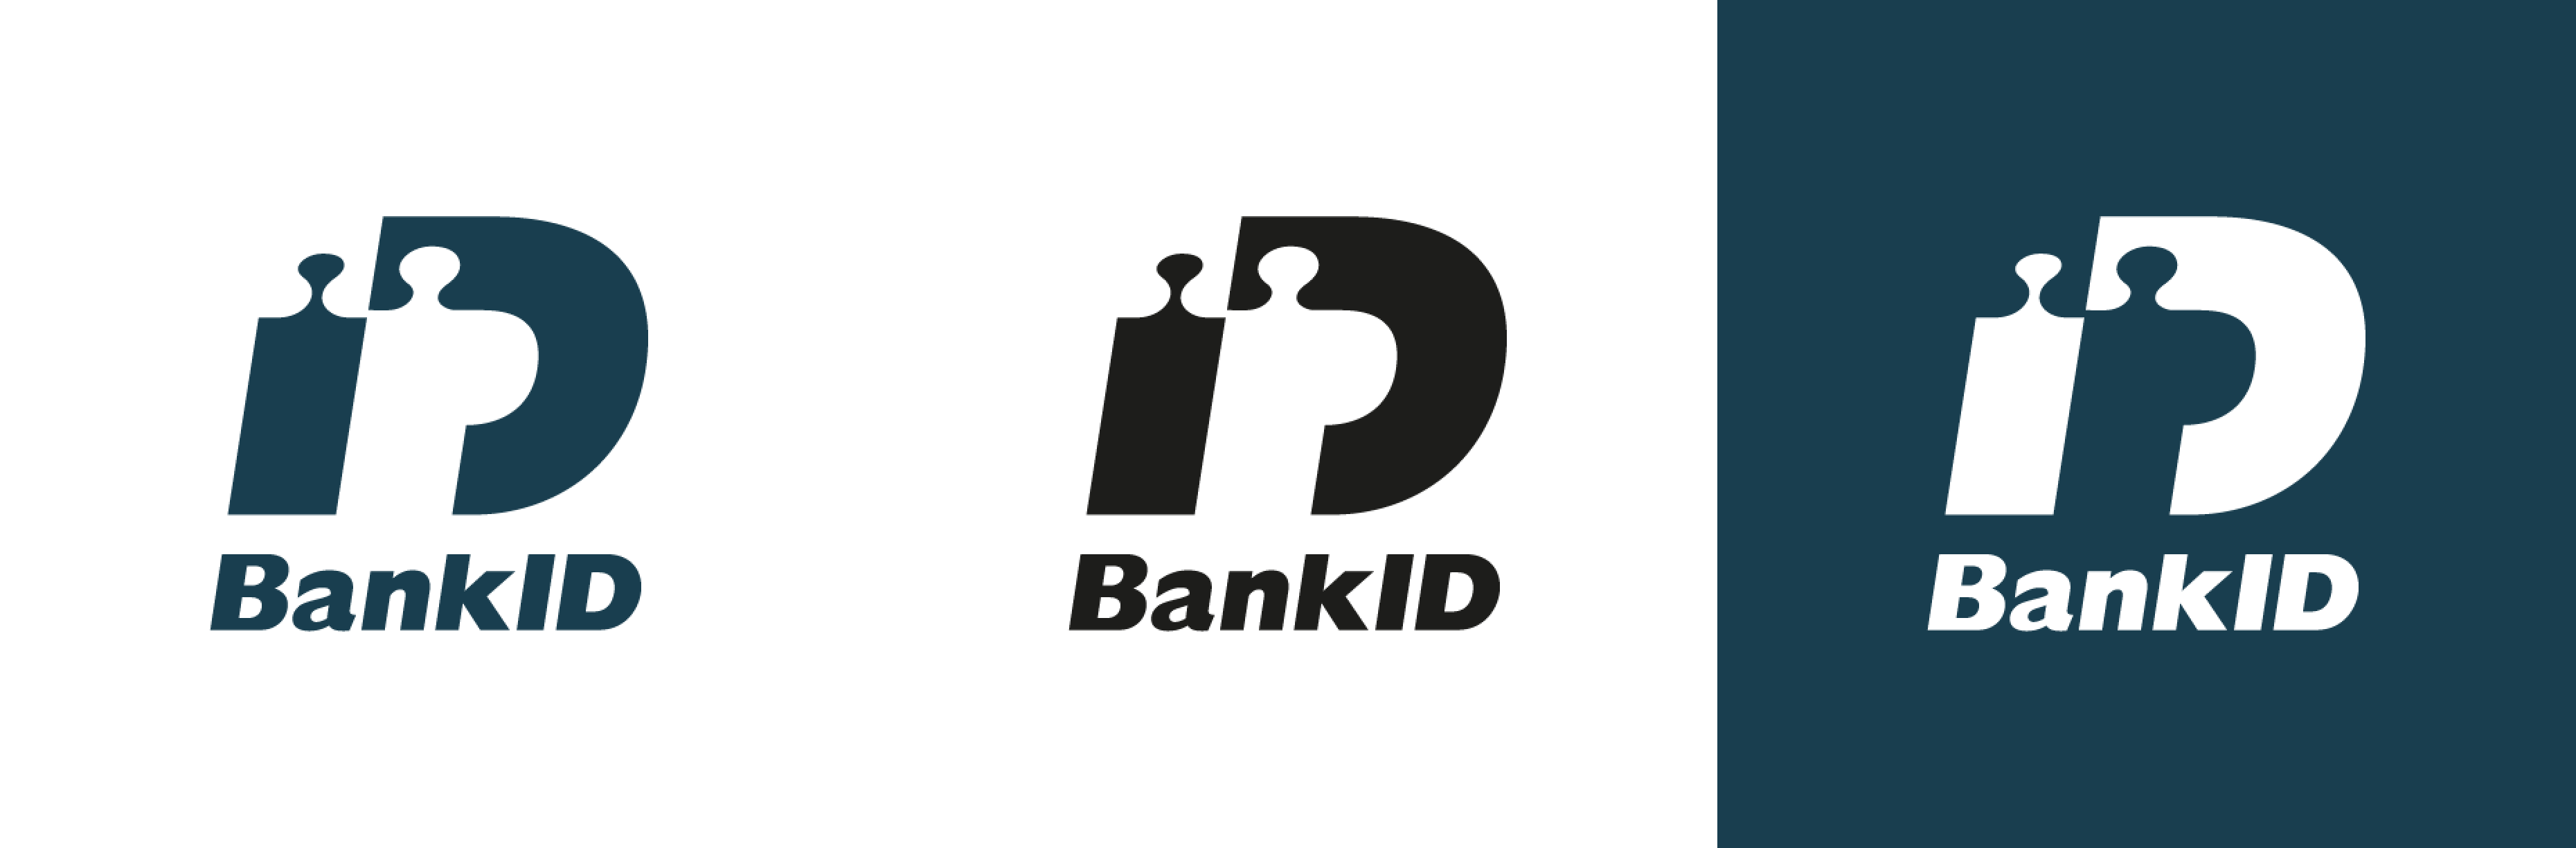 BankID versions